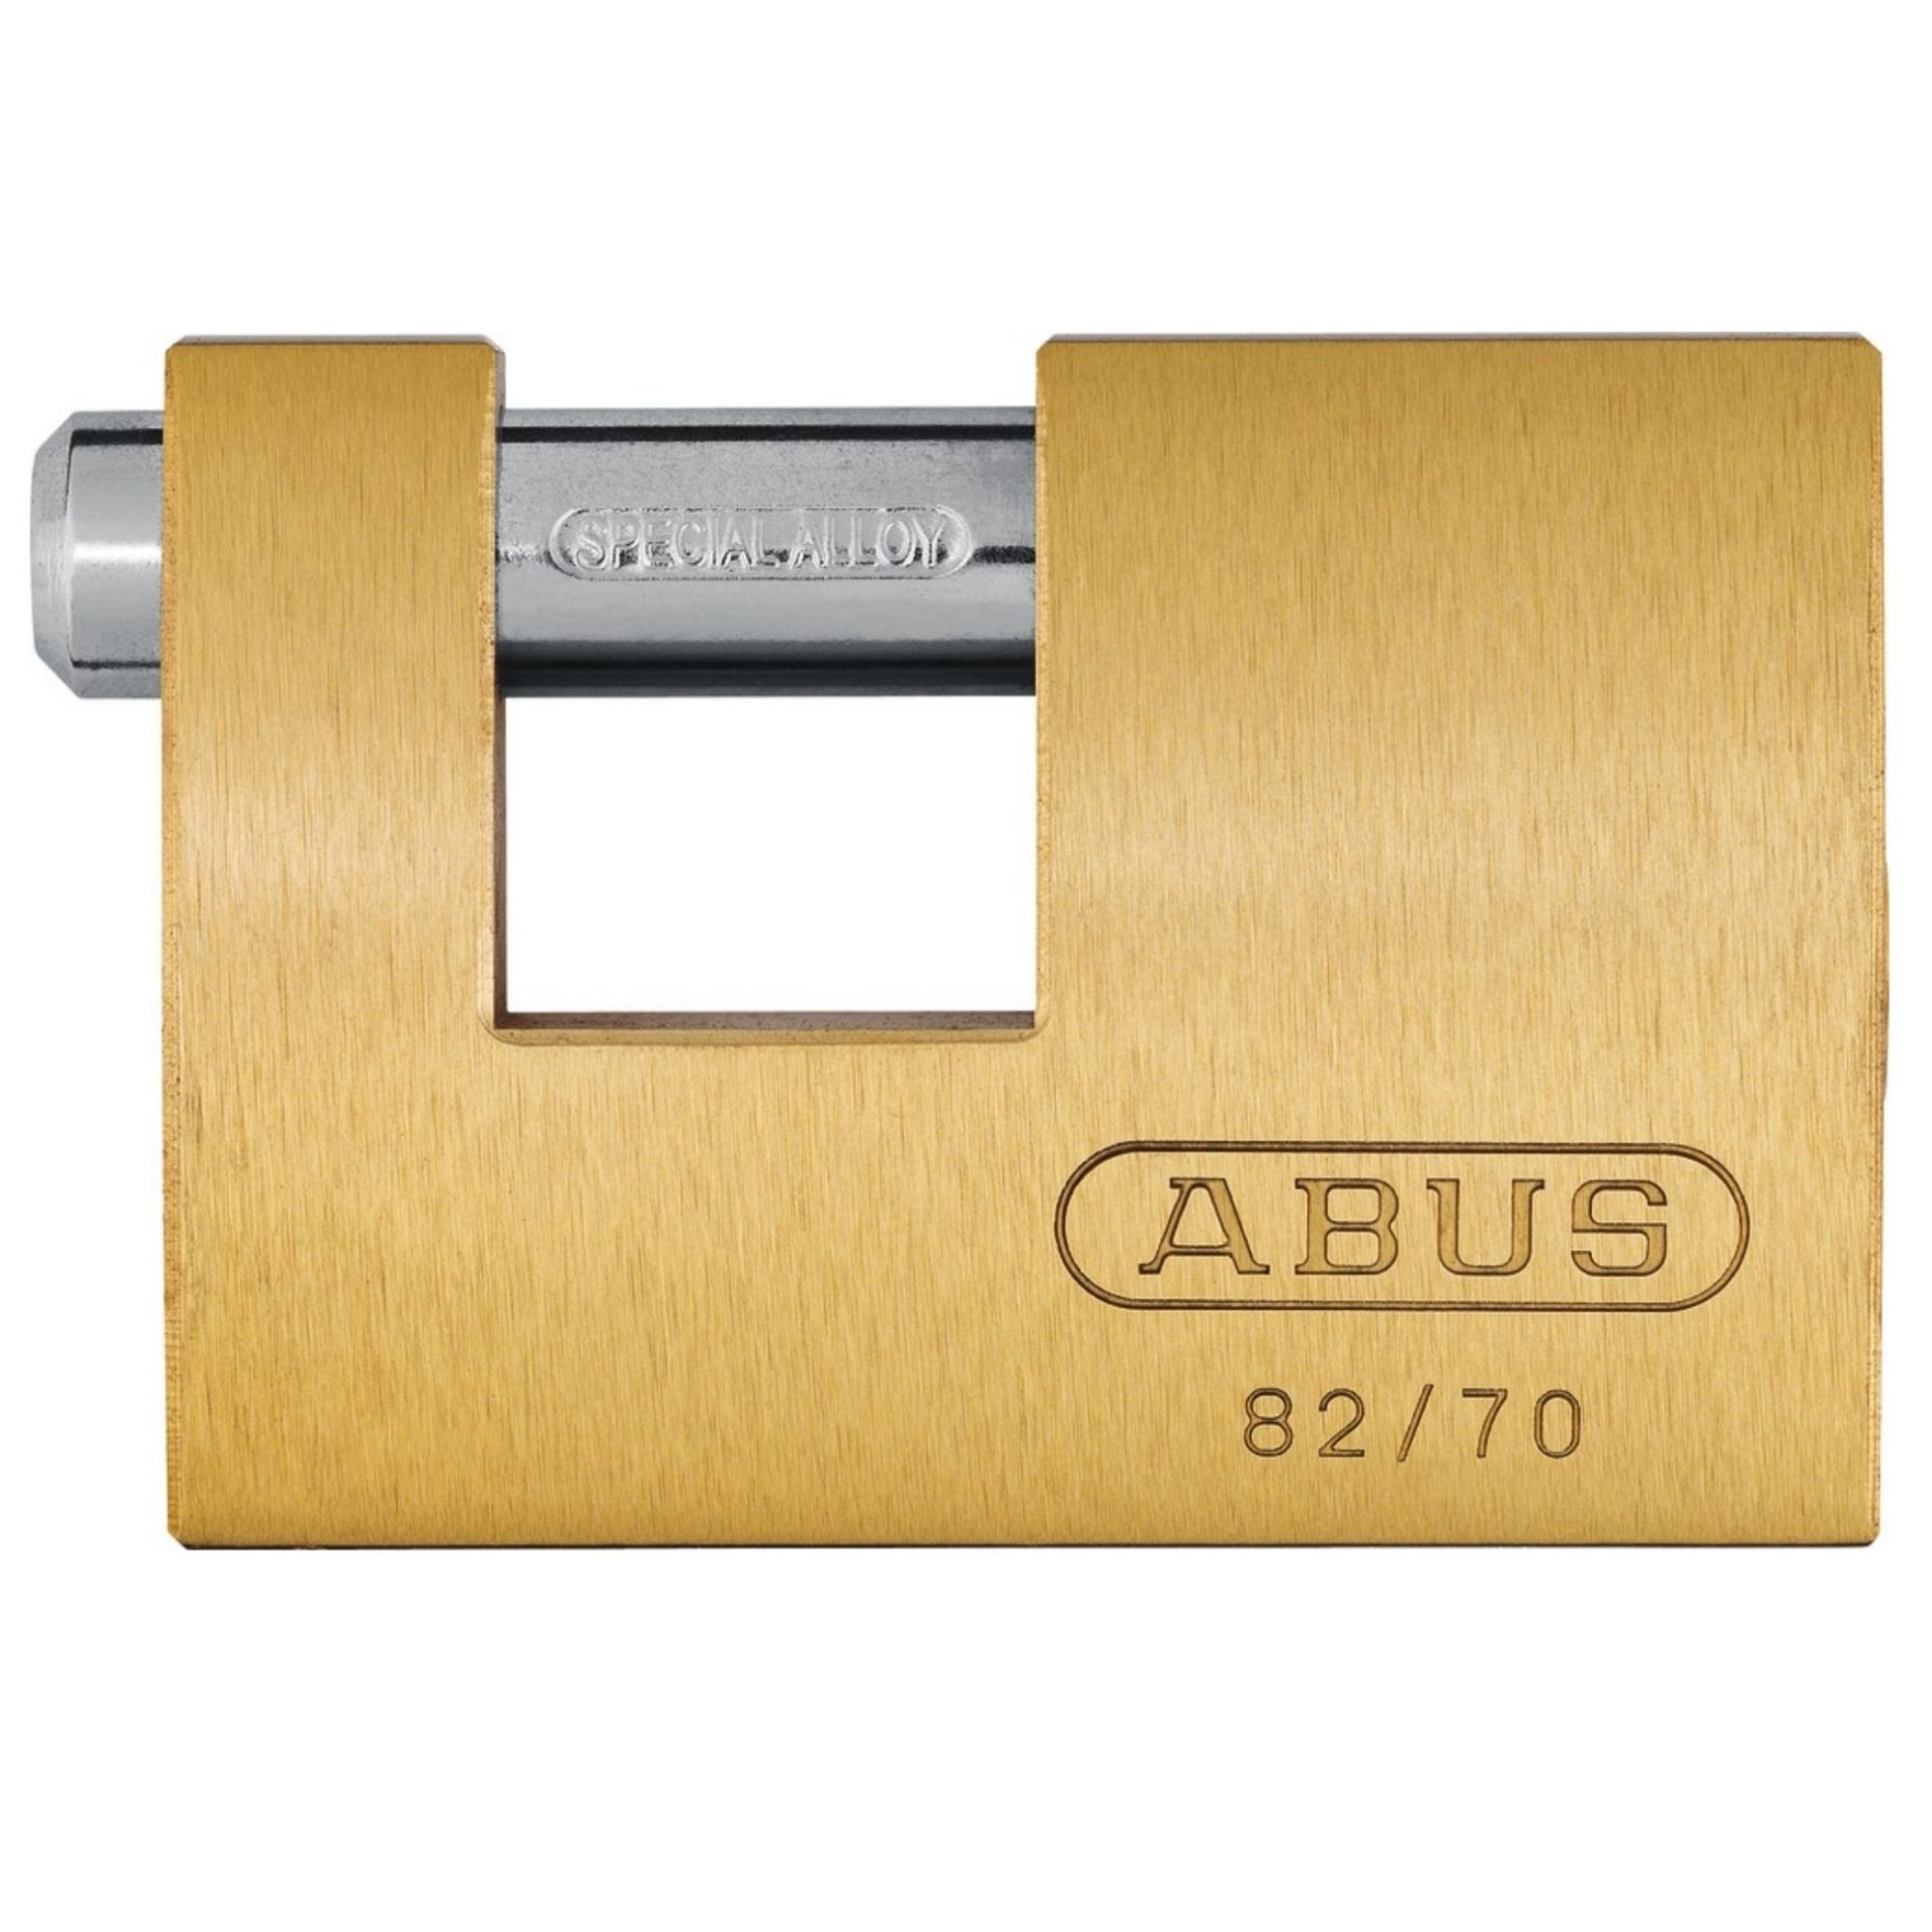 Abus 82/70 KA 8511 Monoblock Lock Keyed Alike Brass Mono Padlocks Match Existing Key# KA8511 - The Lock Source